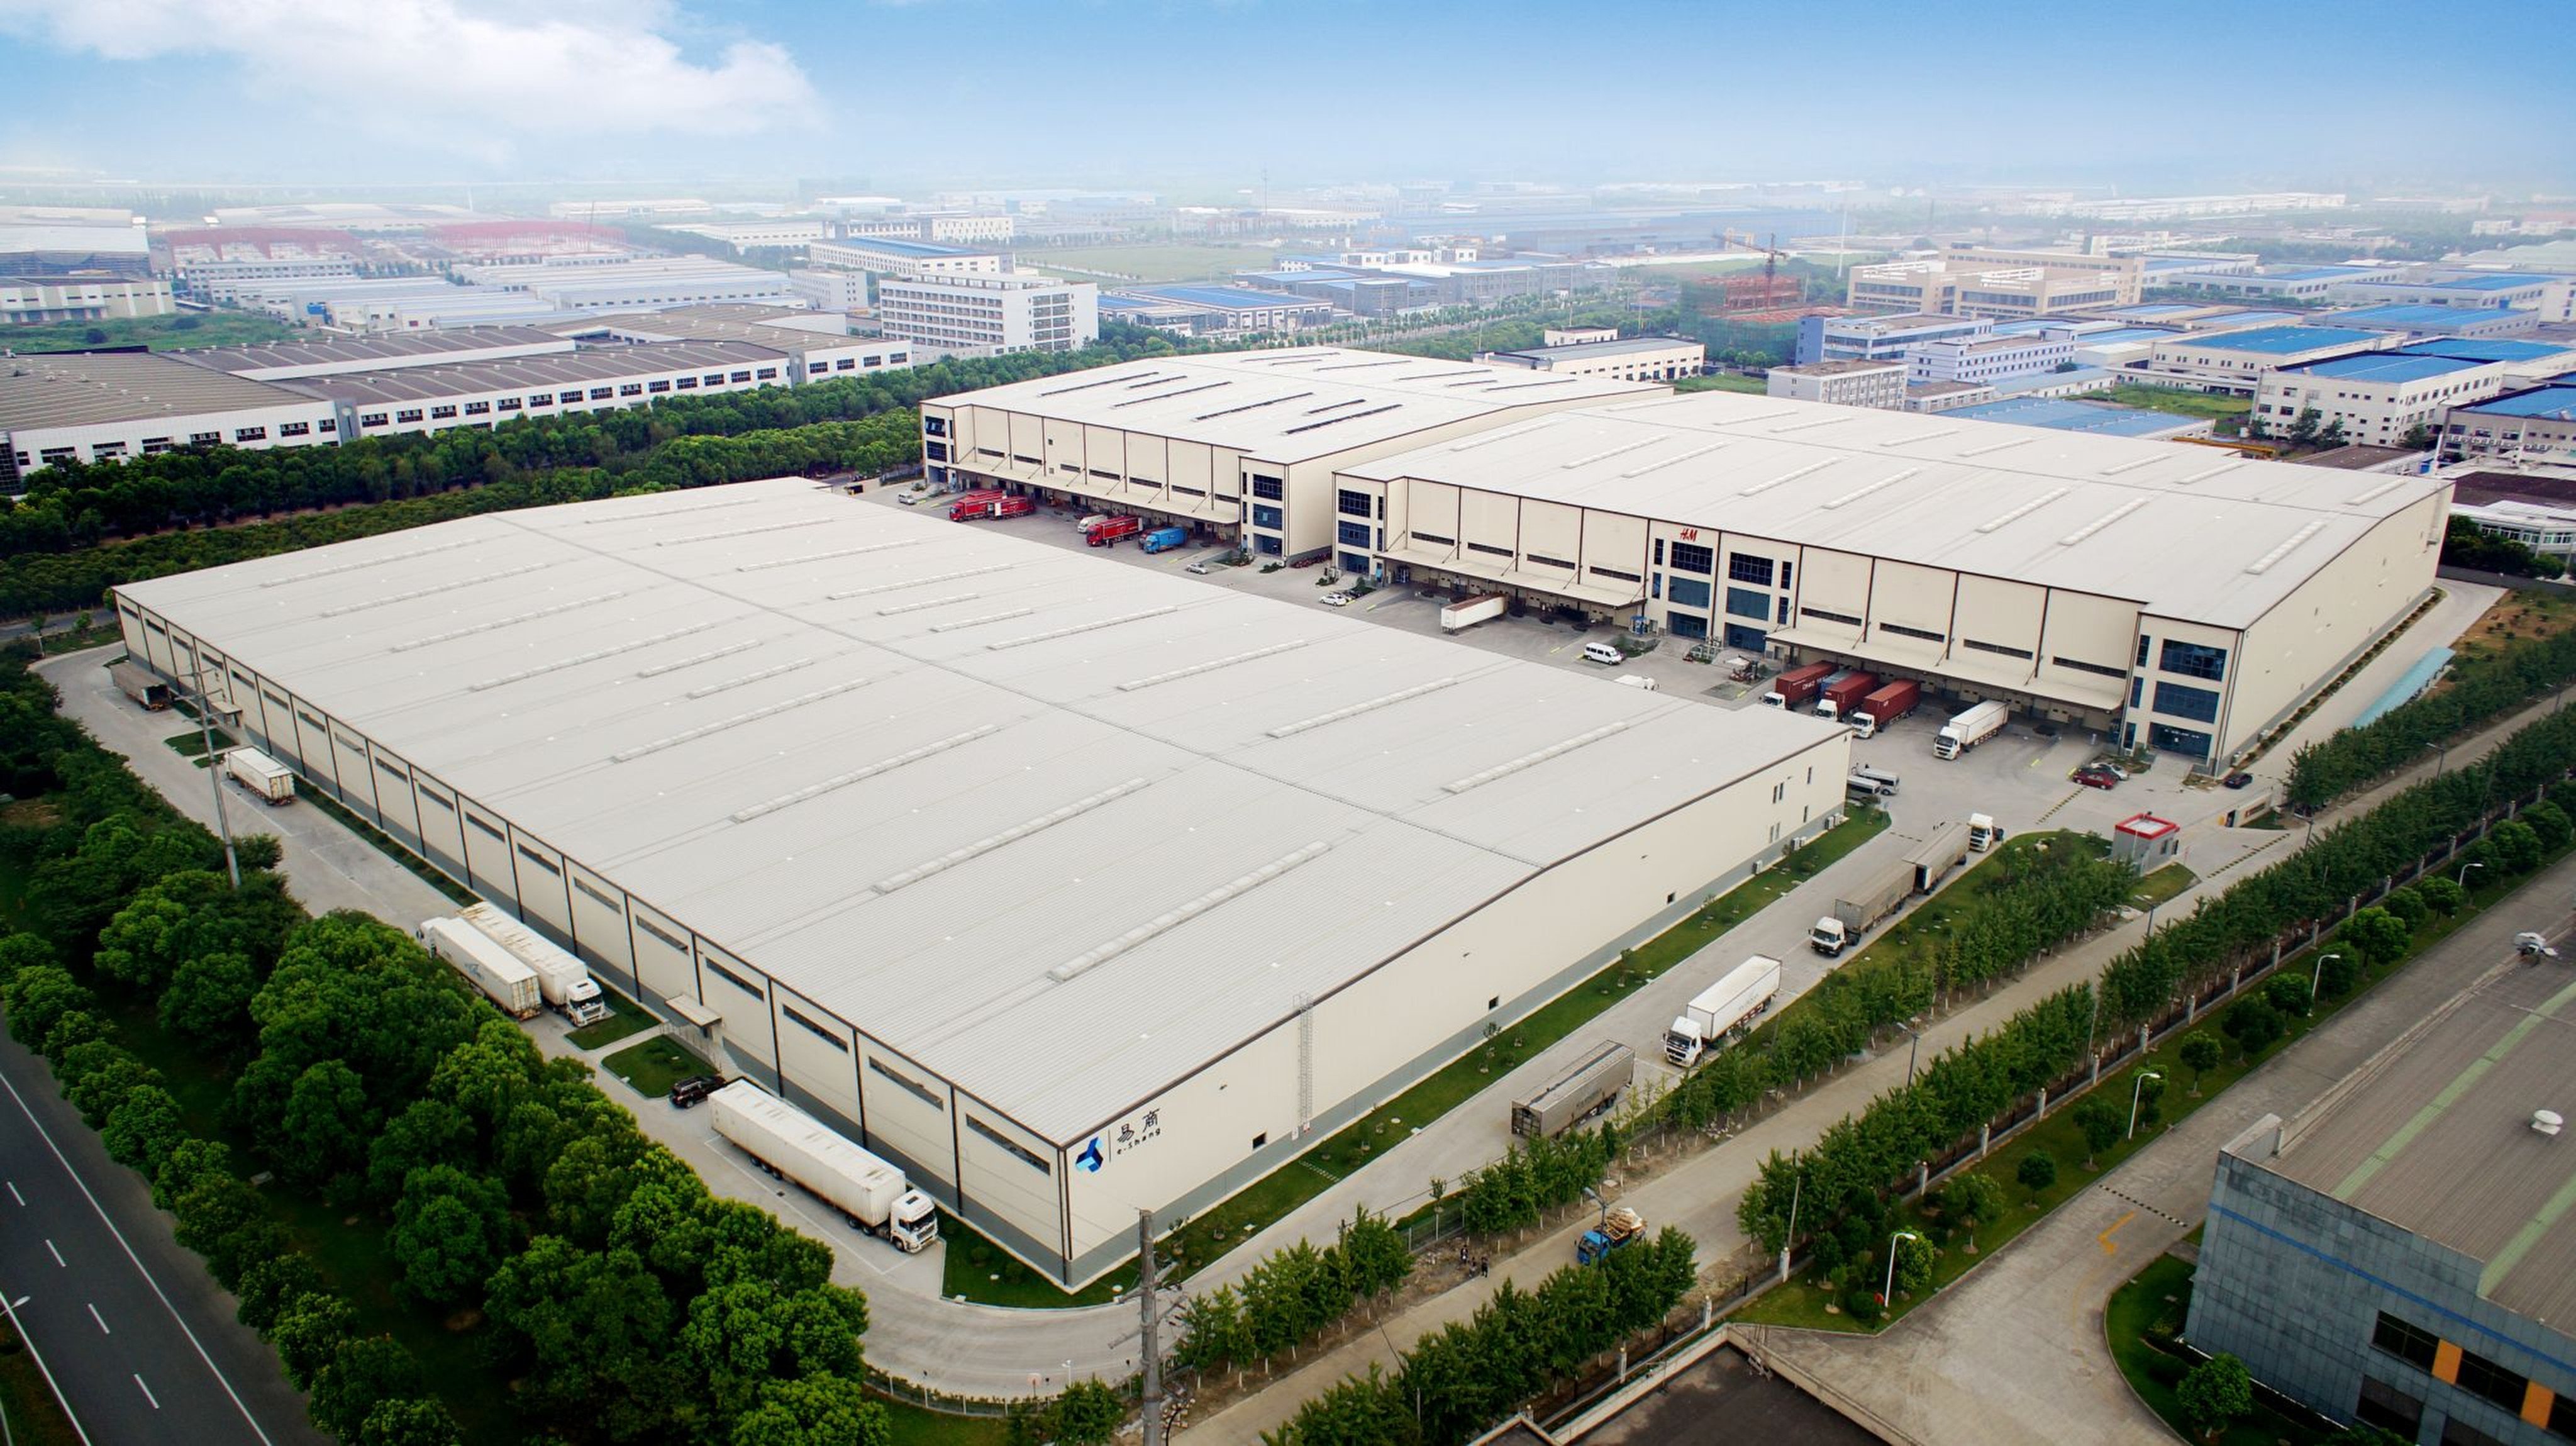 ESR’s C-Reit includes three logistics facilities in Kunshan, a major logistics hub in China’s eastern Jiangsu province located 45 minutes from Shanghai. Photo: ESR